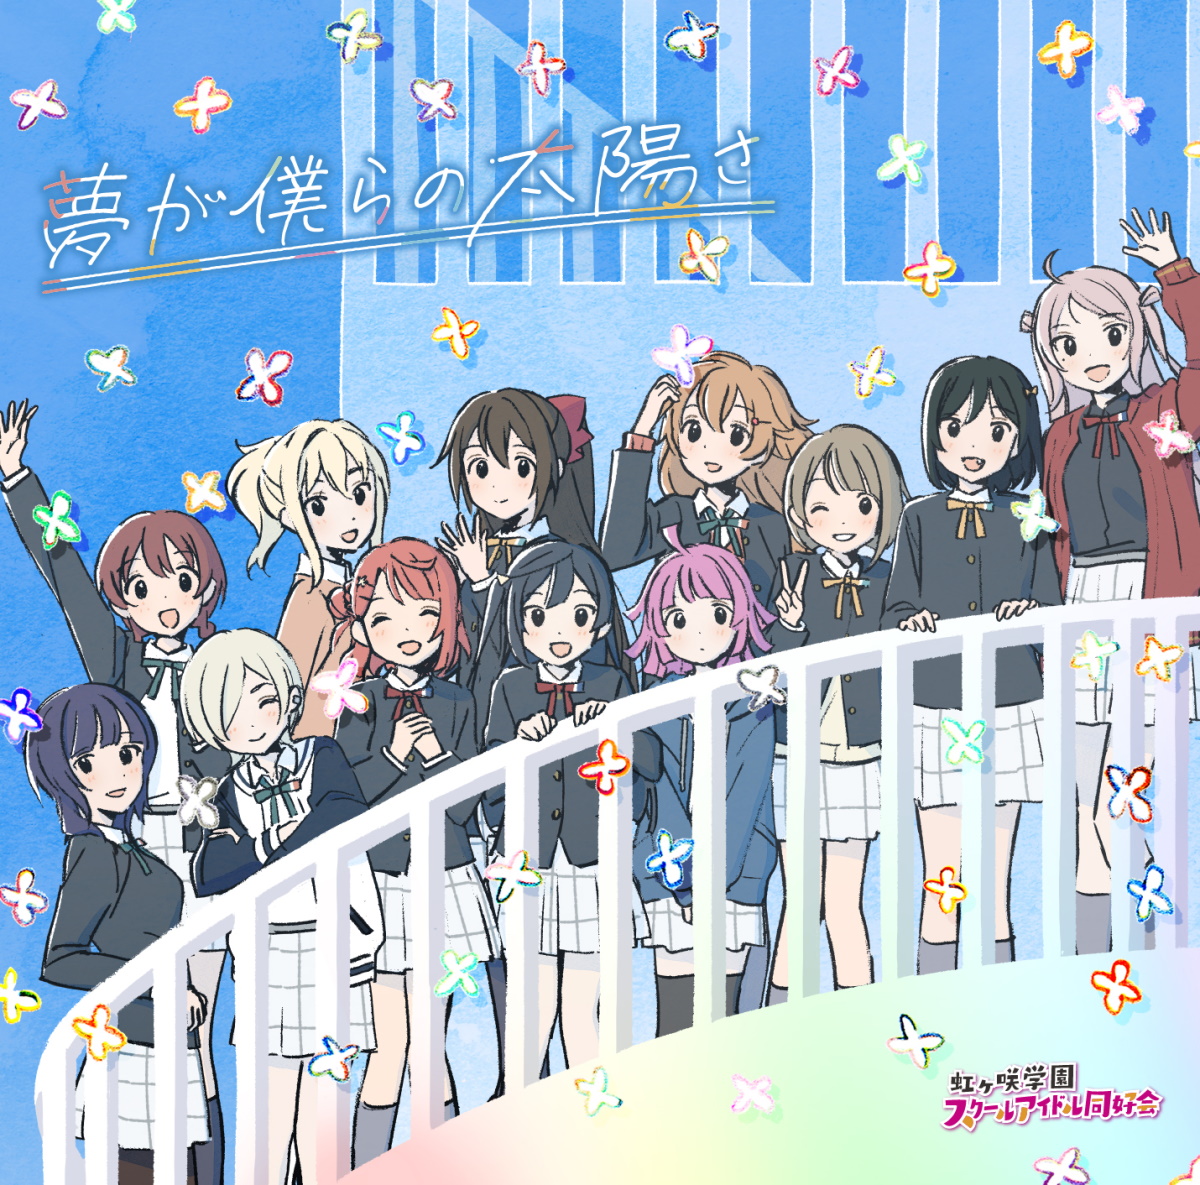 Cover for『Nijigasaki High School Idol Club - Yume ga Bokura no Taiyou sa』from the release『TV Anime 